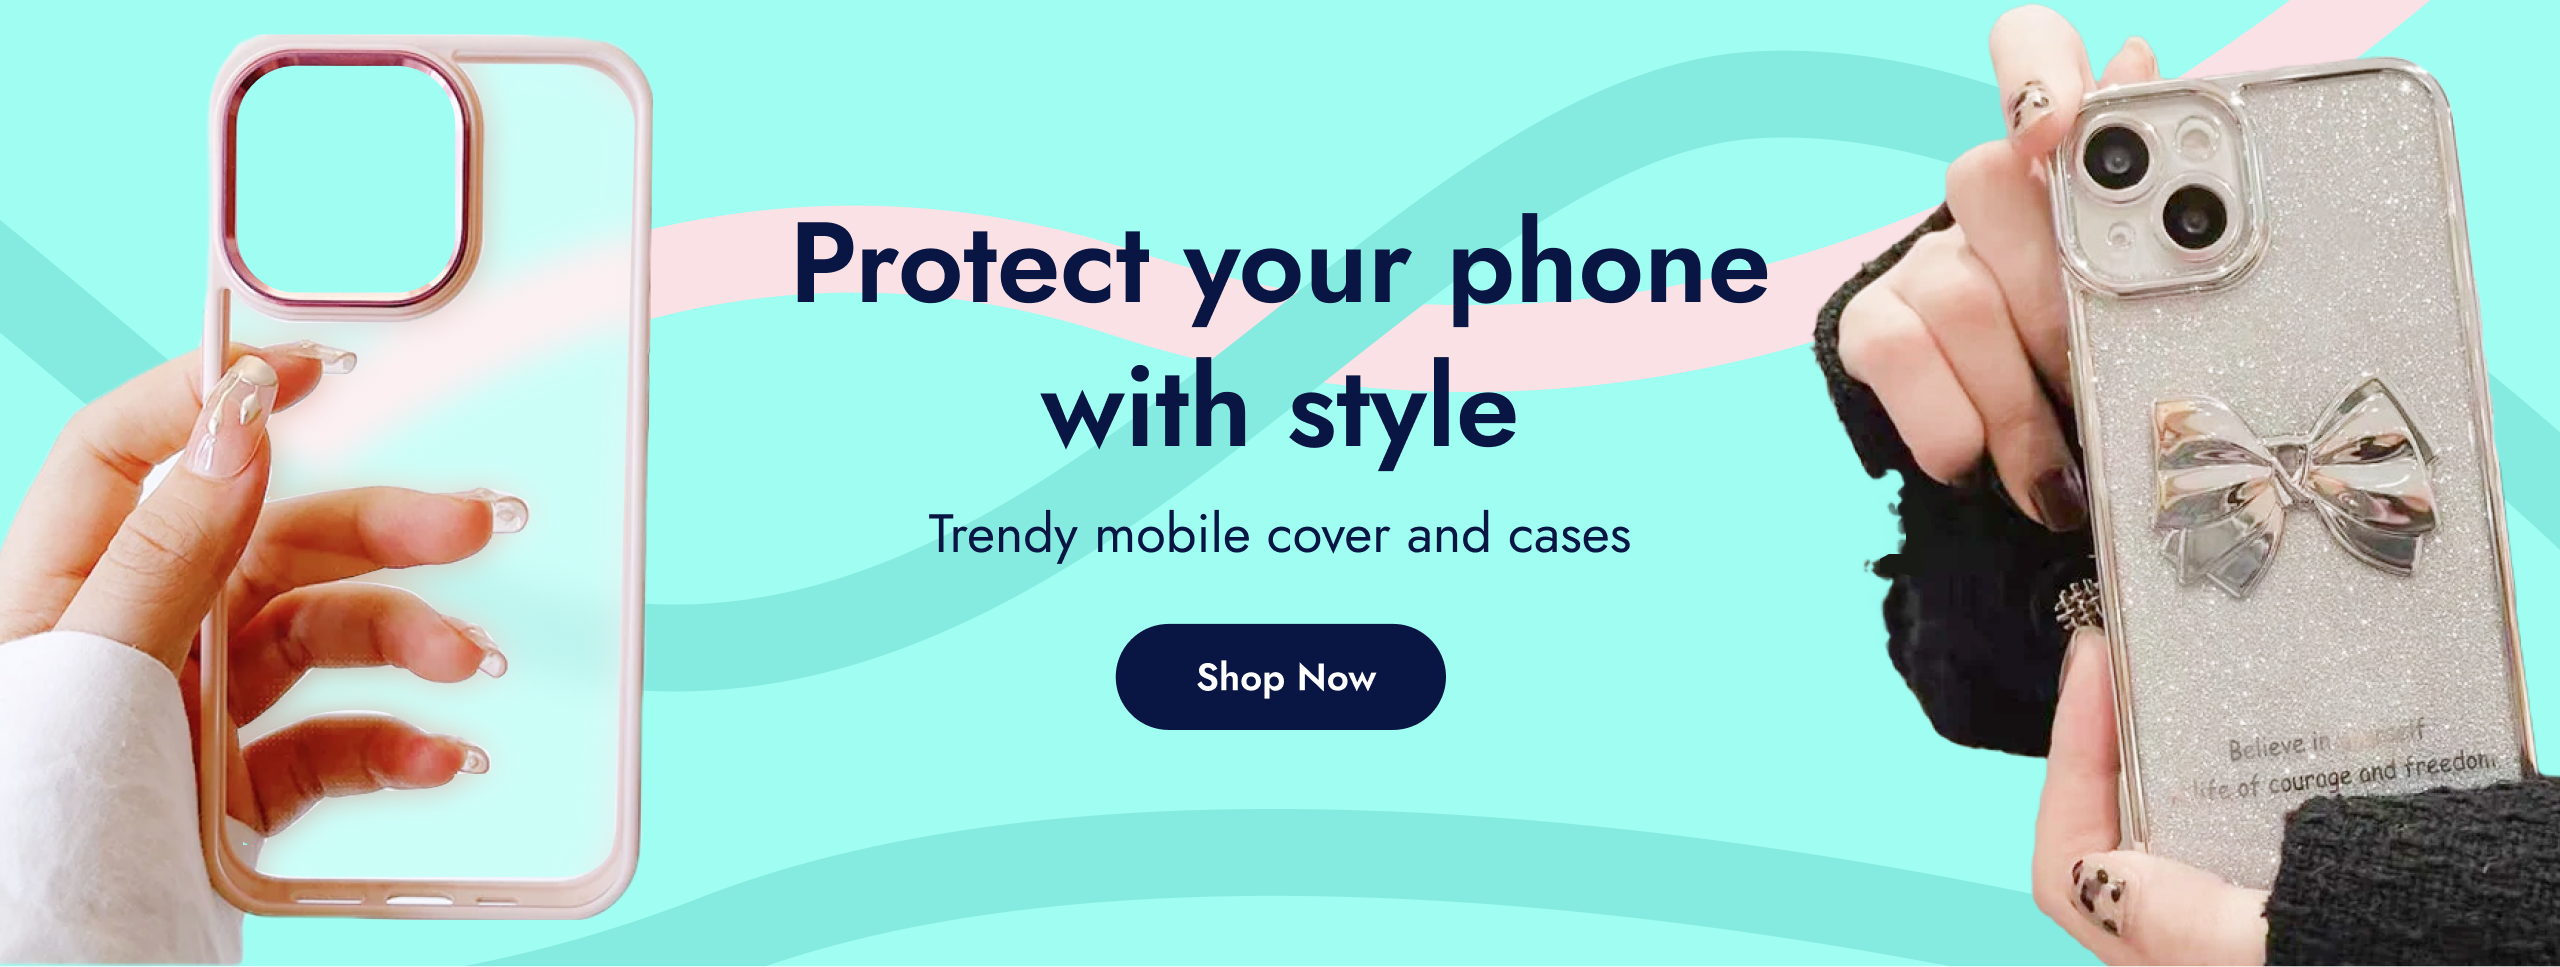 Buy Premium Mobile Cases & Covers in India - Planetcart